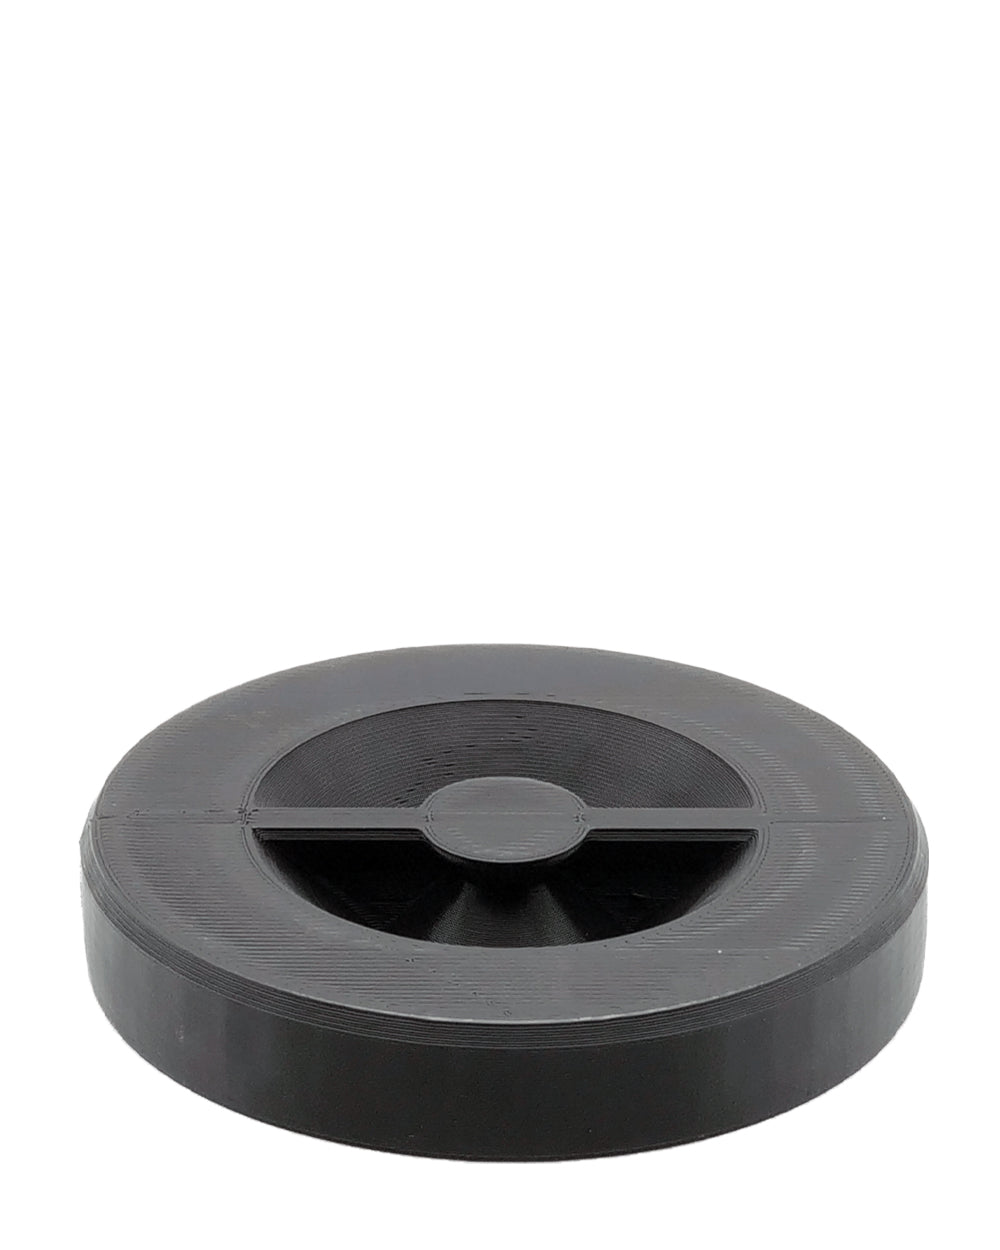 HUMBOLDT | Black Pre-Rolled Cones Filling Machine Starter Kit 109mm | Fill 55 Cones Per Run - 4